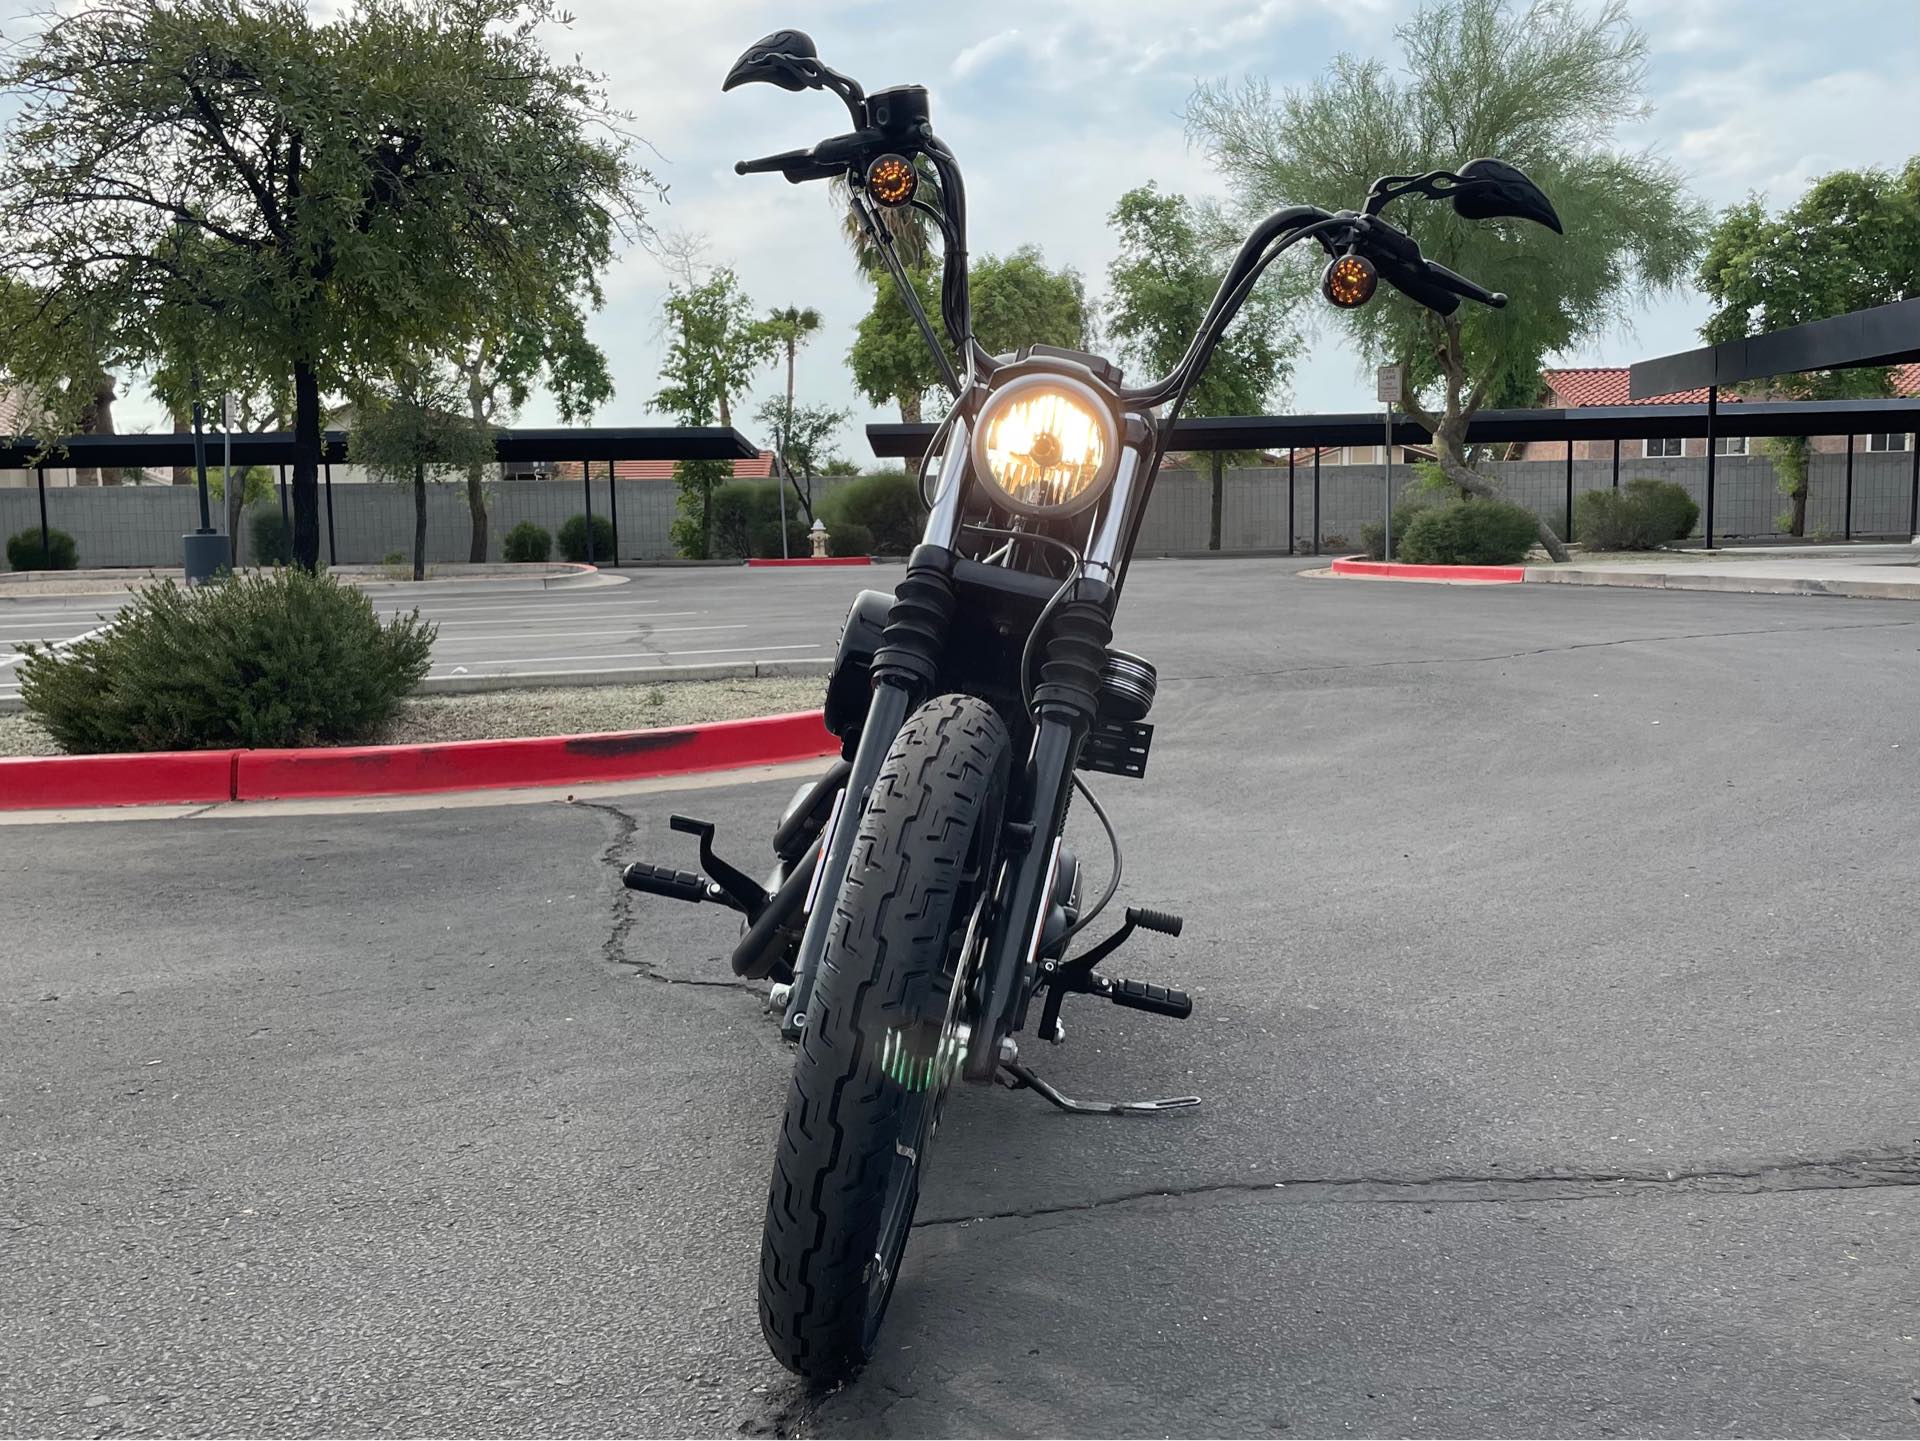 2017 Harley-Davidson Sportster Iron 883 at Buddy Stubbs Arizona Harley-Davidson